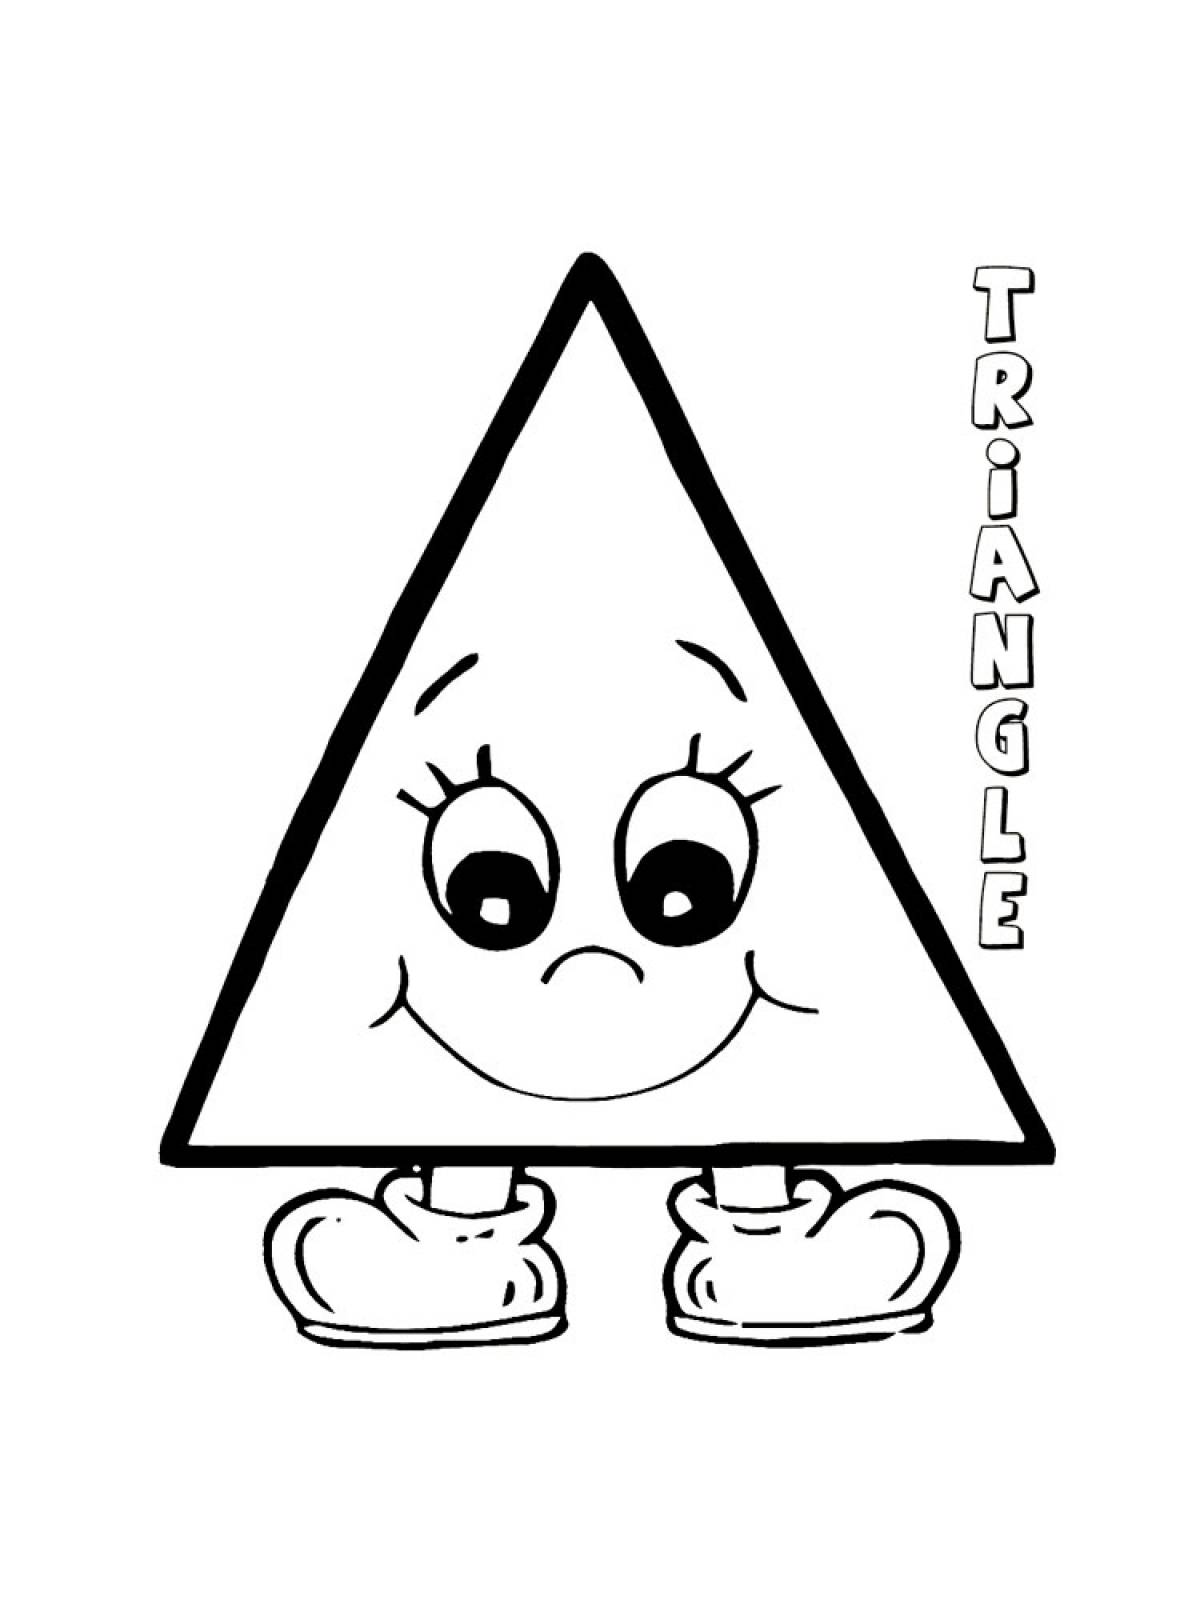 Triangle 9